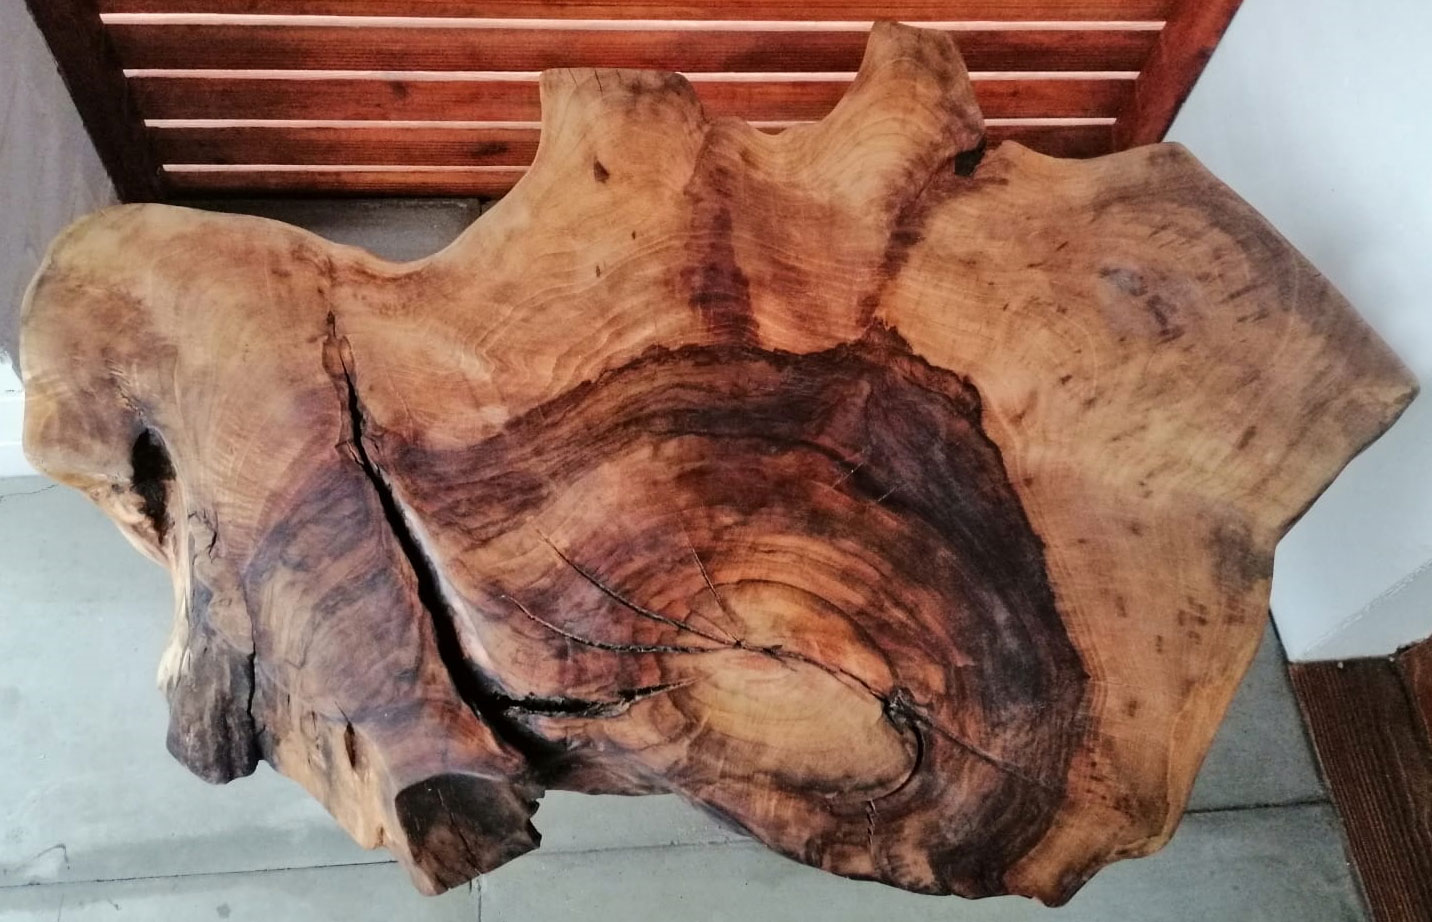 Stolik z plastra drewna